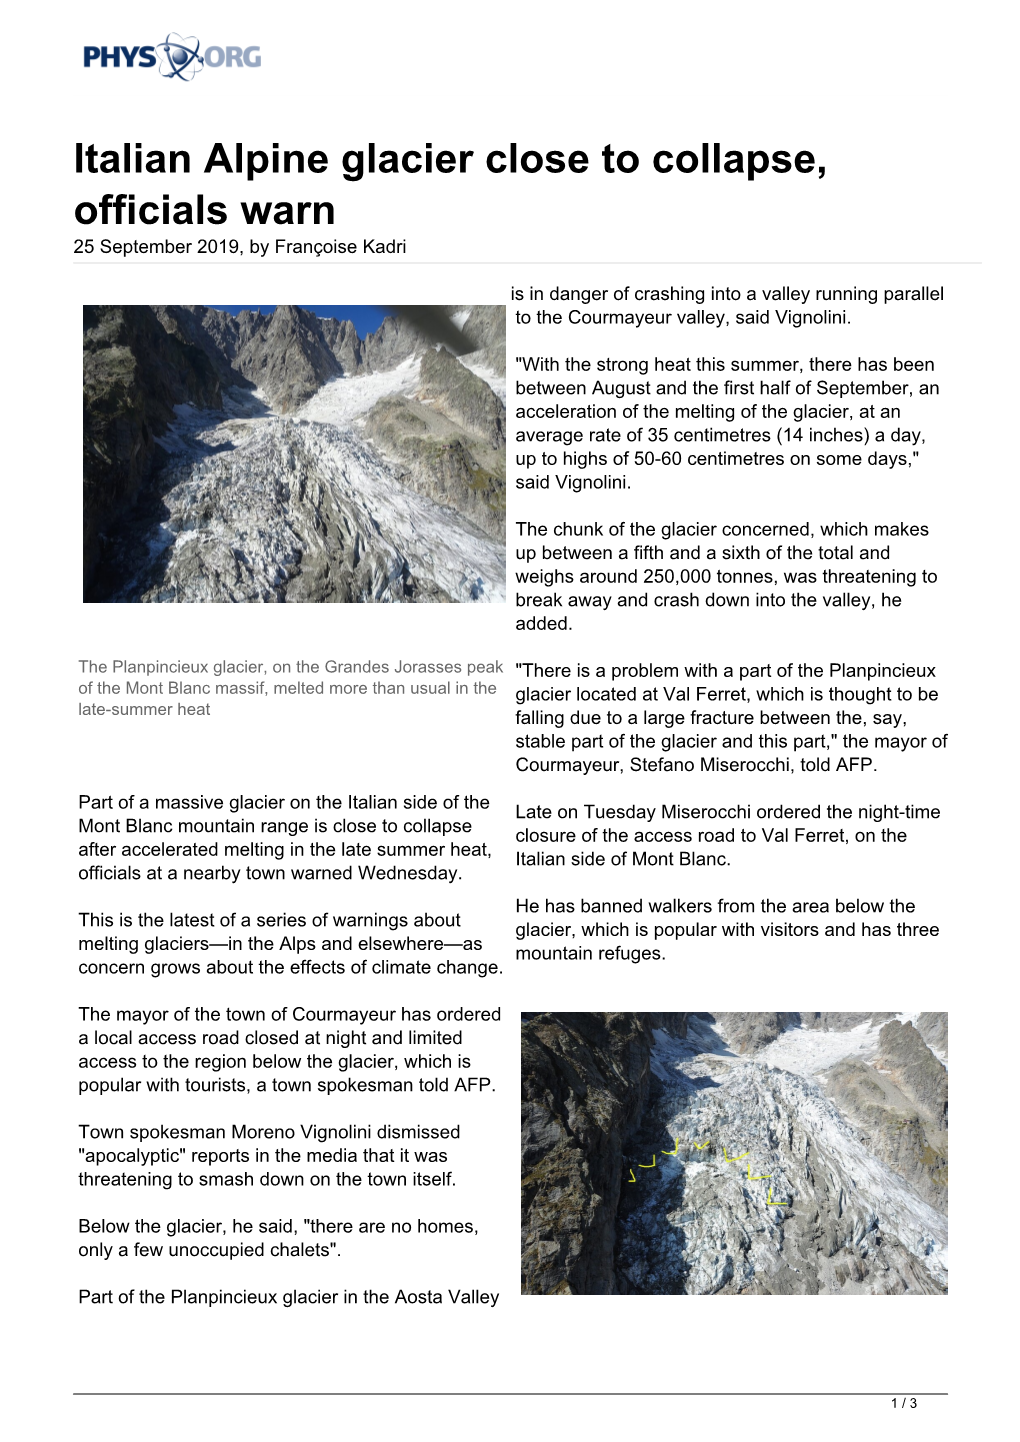 Italian Alpine Glacier Close to Collapse, Officials Warn 25 September 2019, by Françoise Kadri